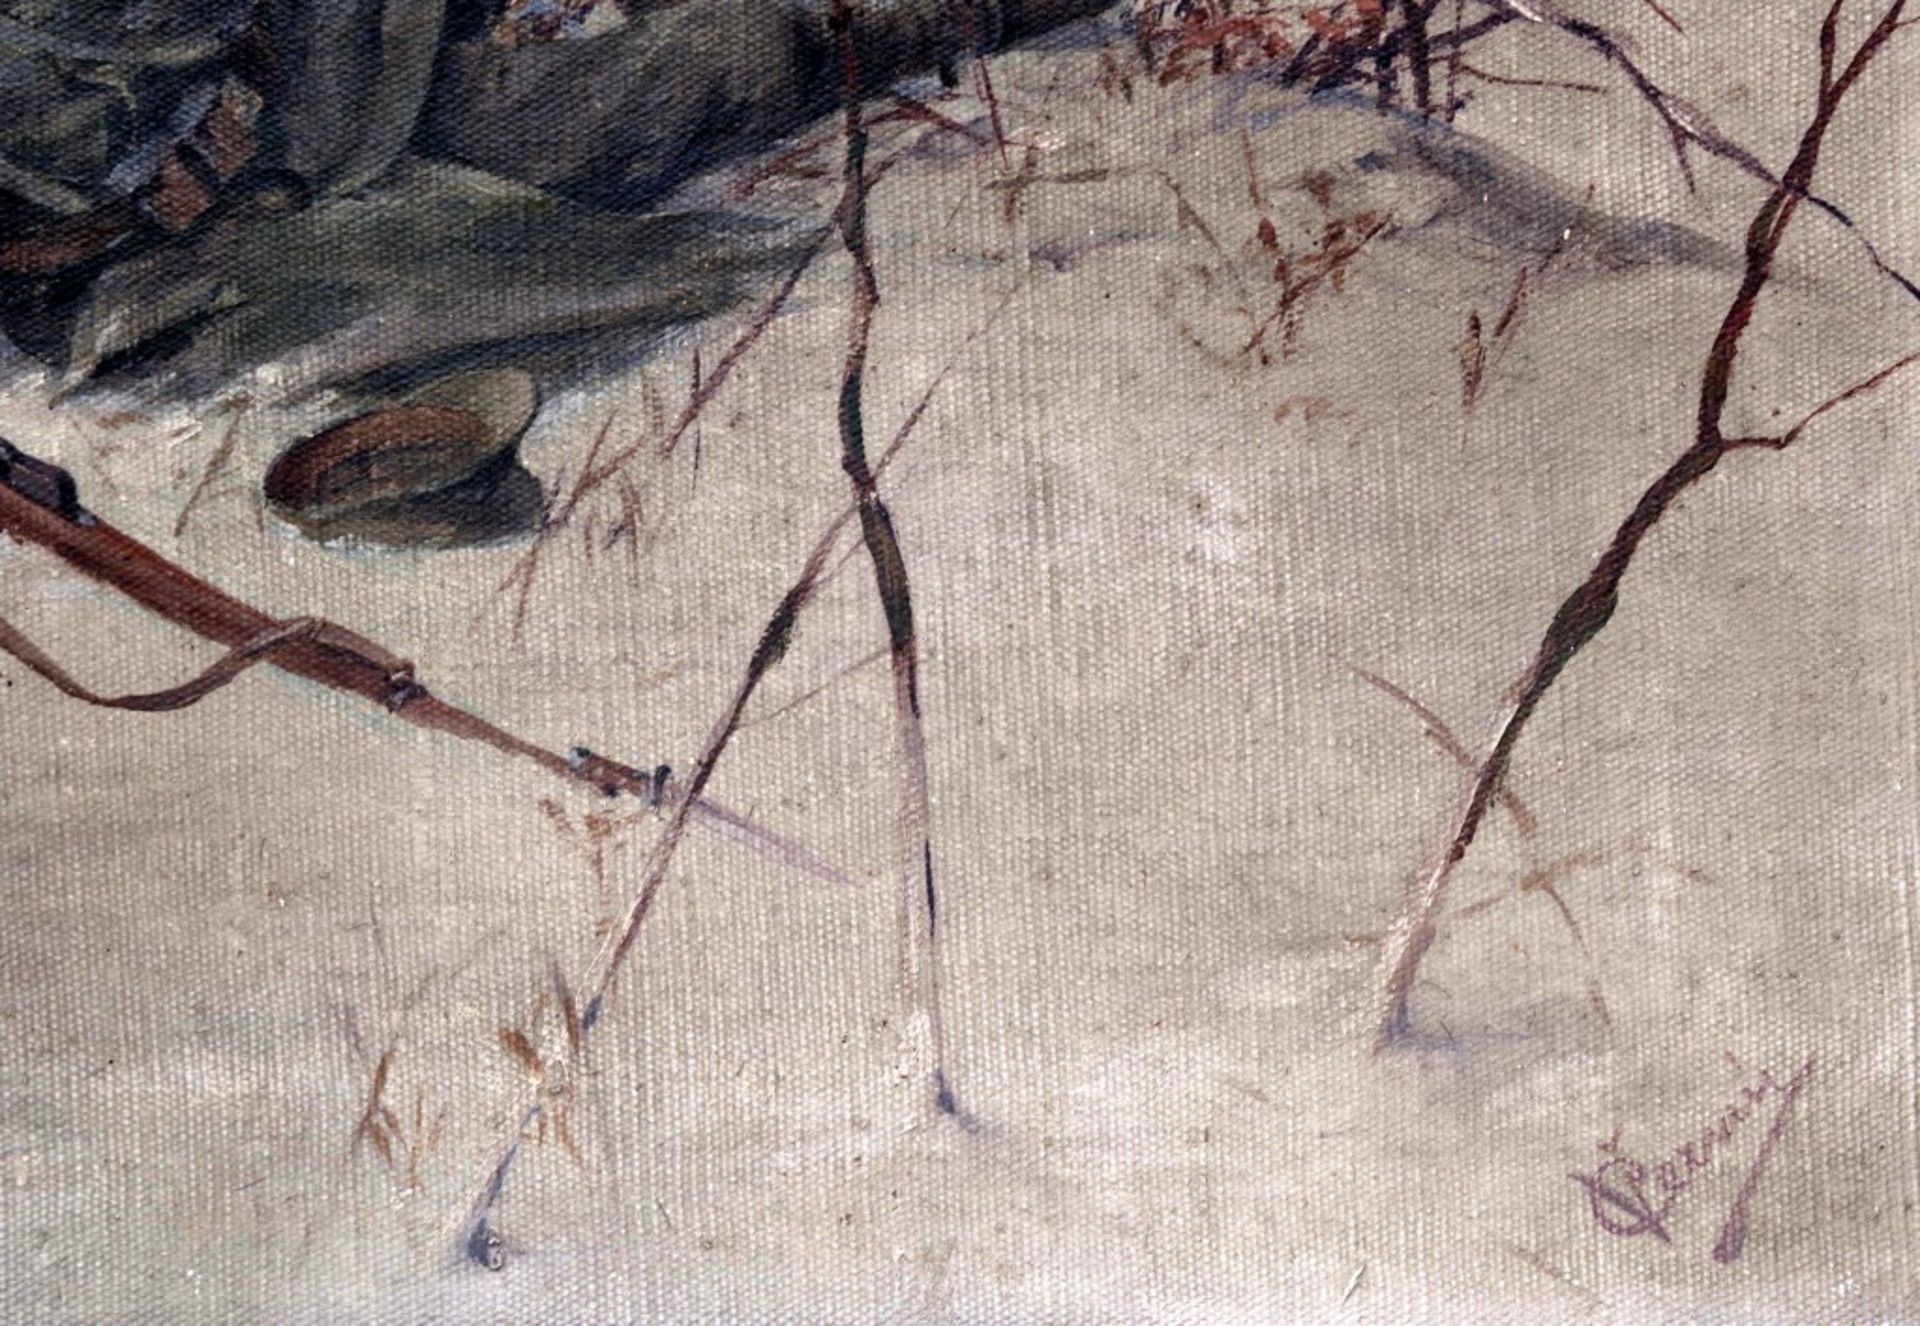 A Wounded Soldier, Venceslav Cerny - Bild 2 aus 2